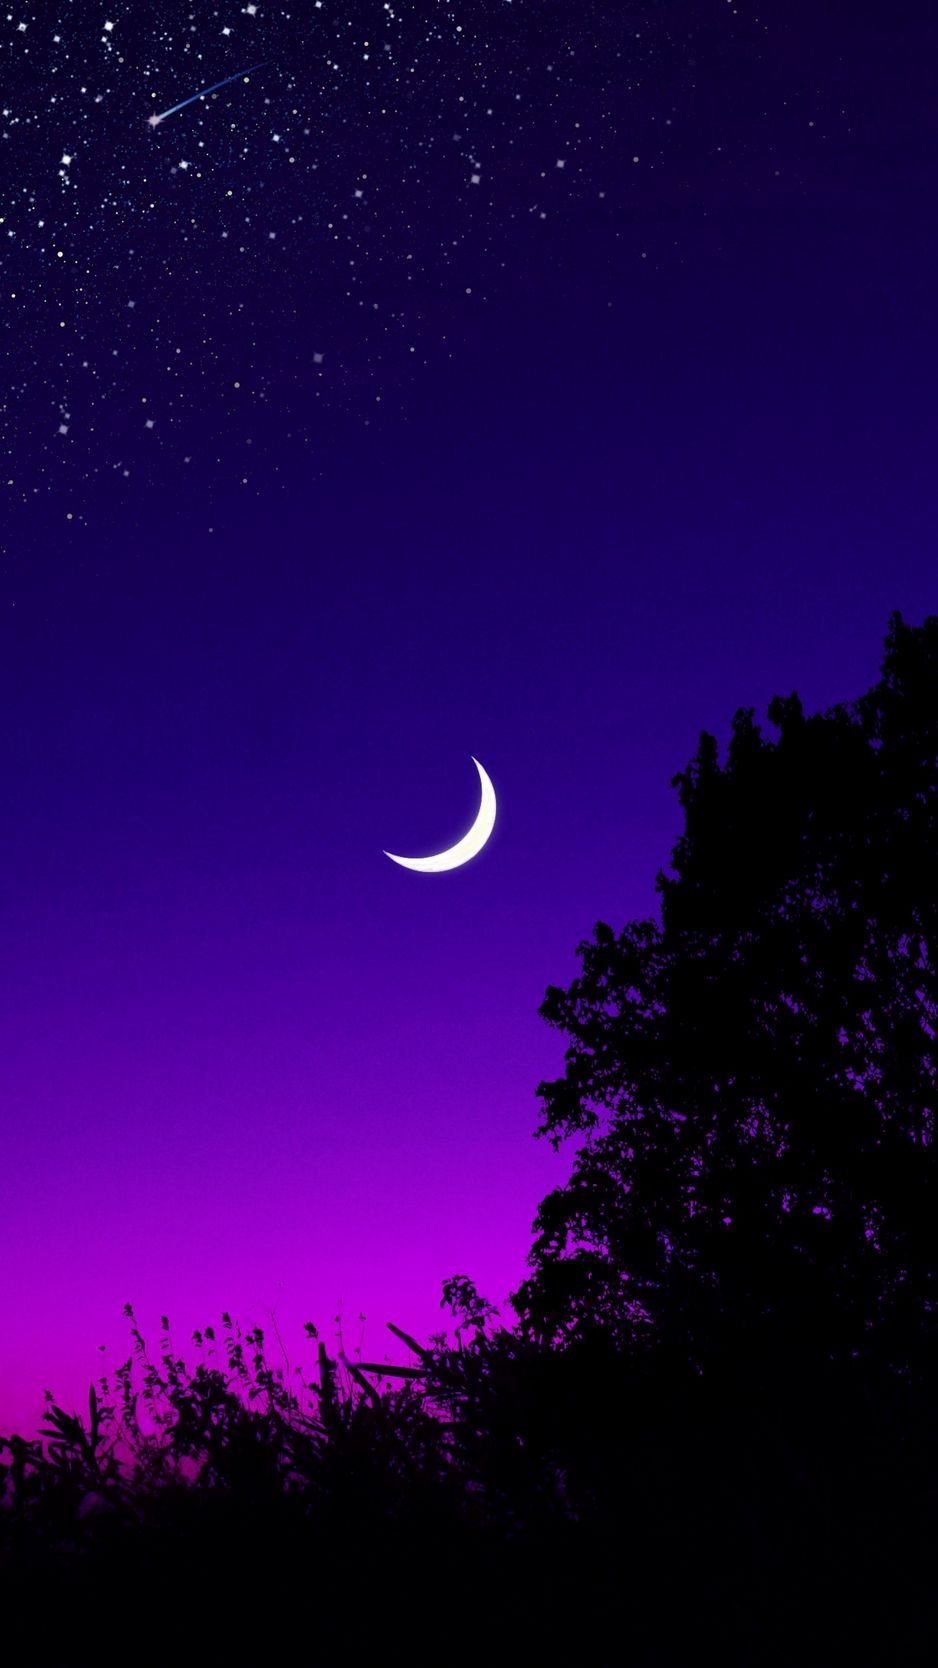 Tomorrow | Night sky wallpaper, Moon and stars wallpaper, Sky aesthetic